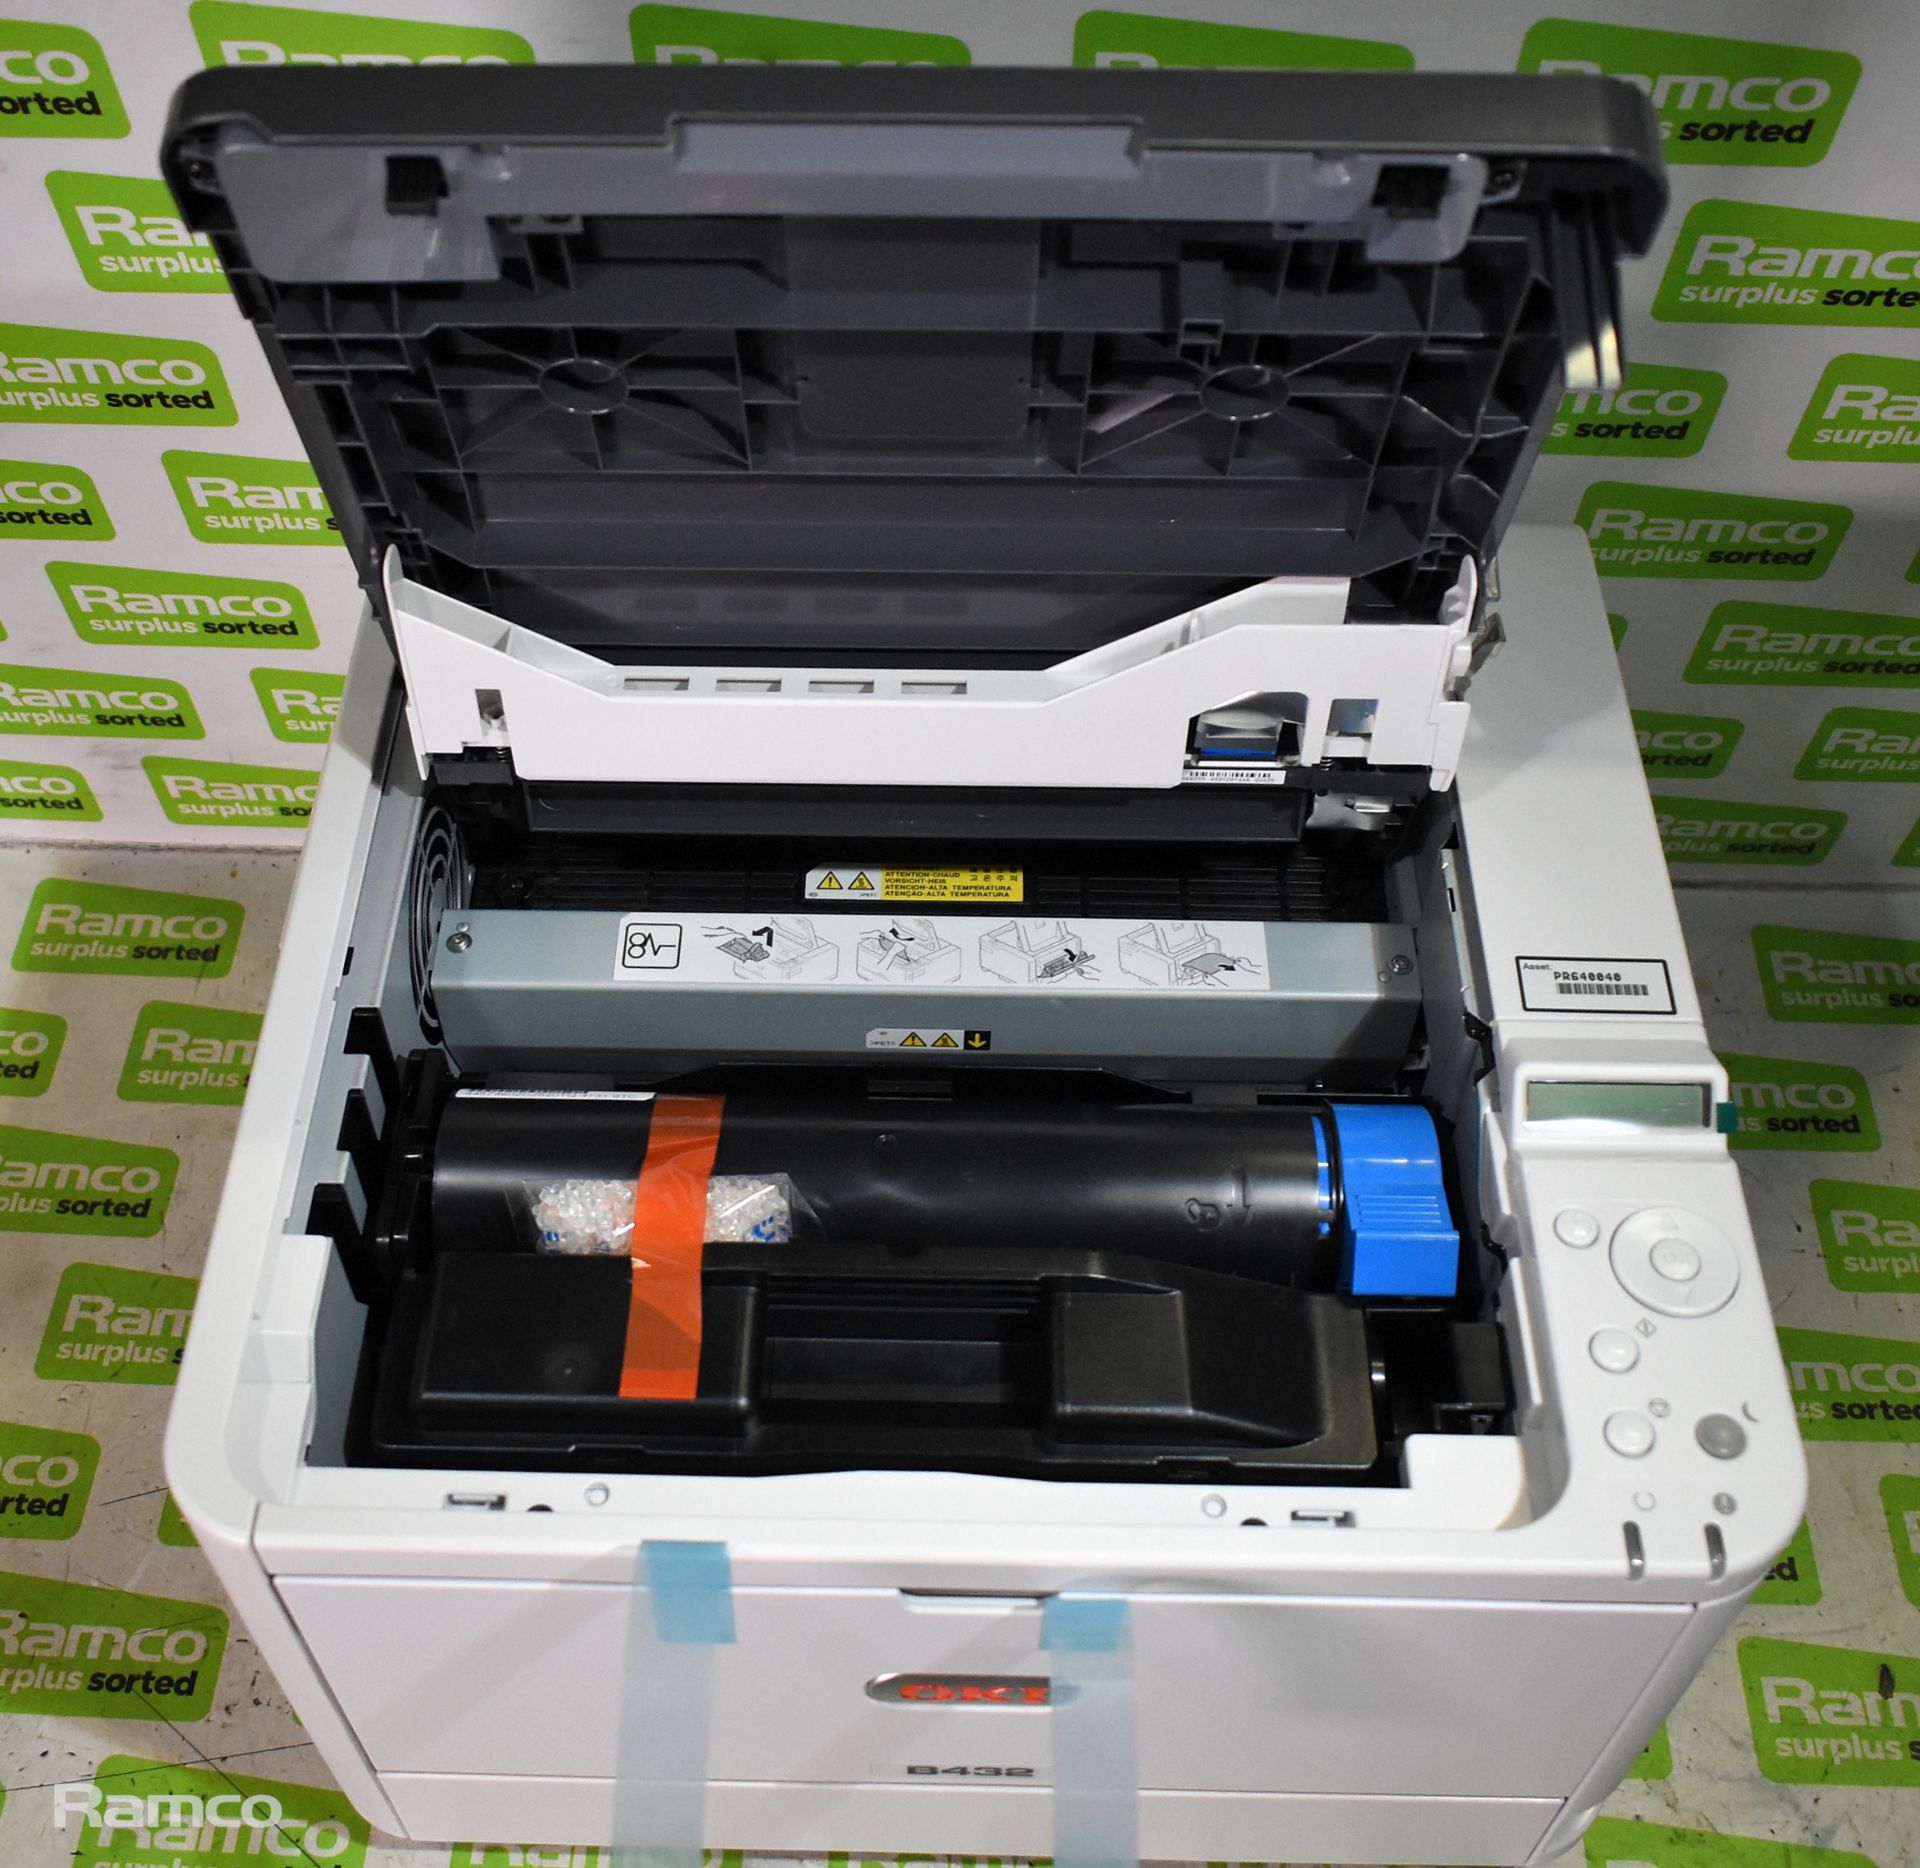 OKI N22500B monochrome duplex laser printer - Image 10 of 14